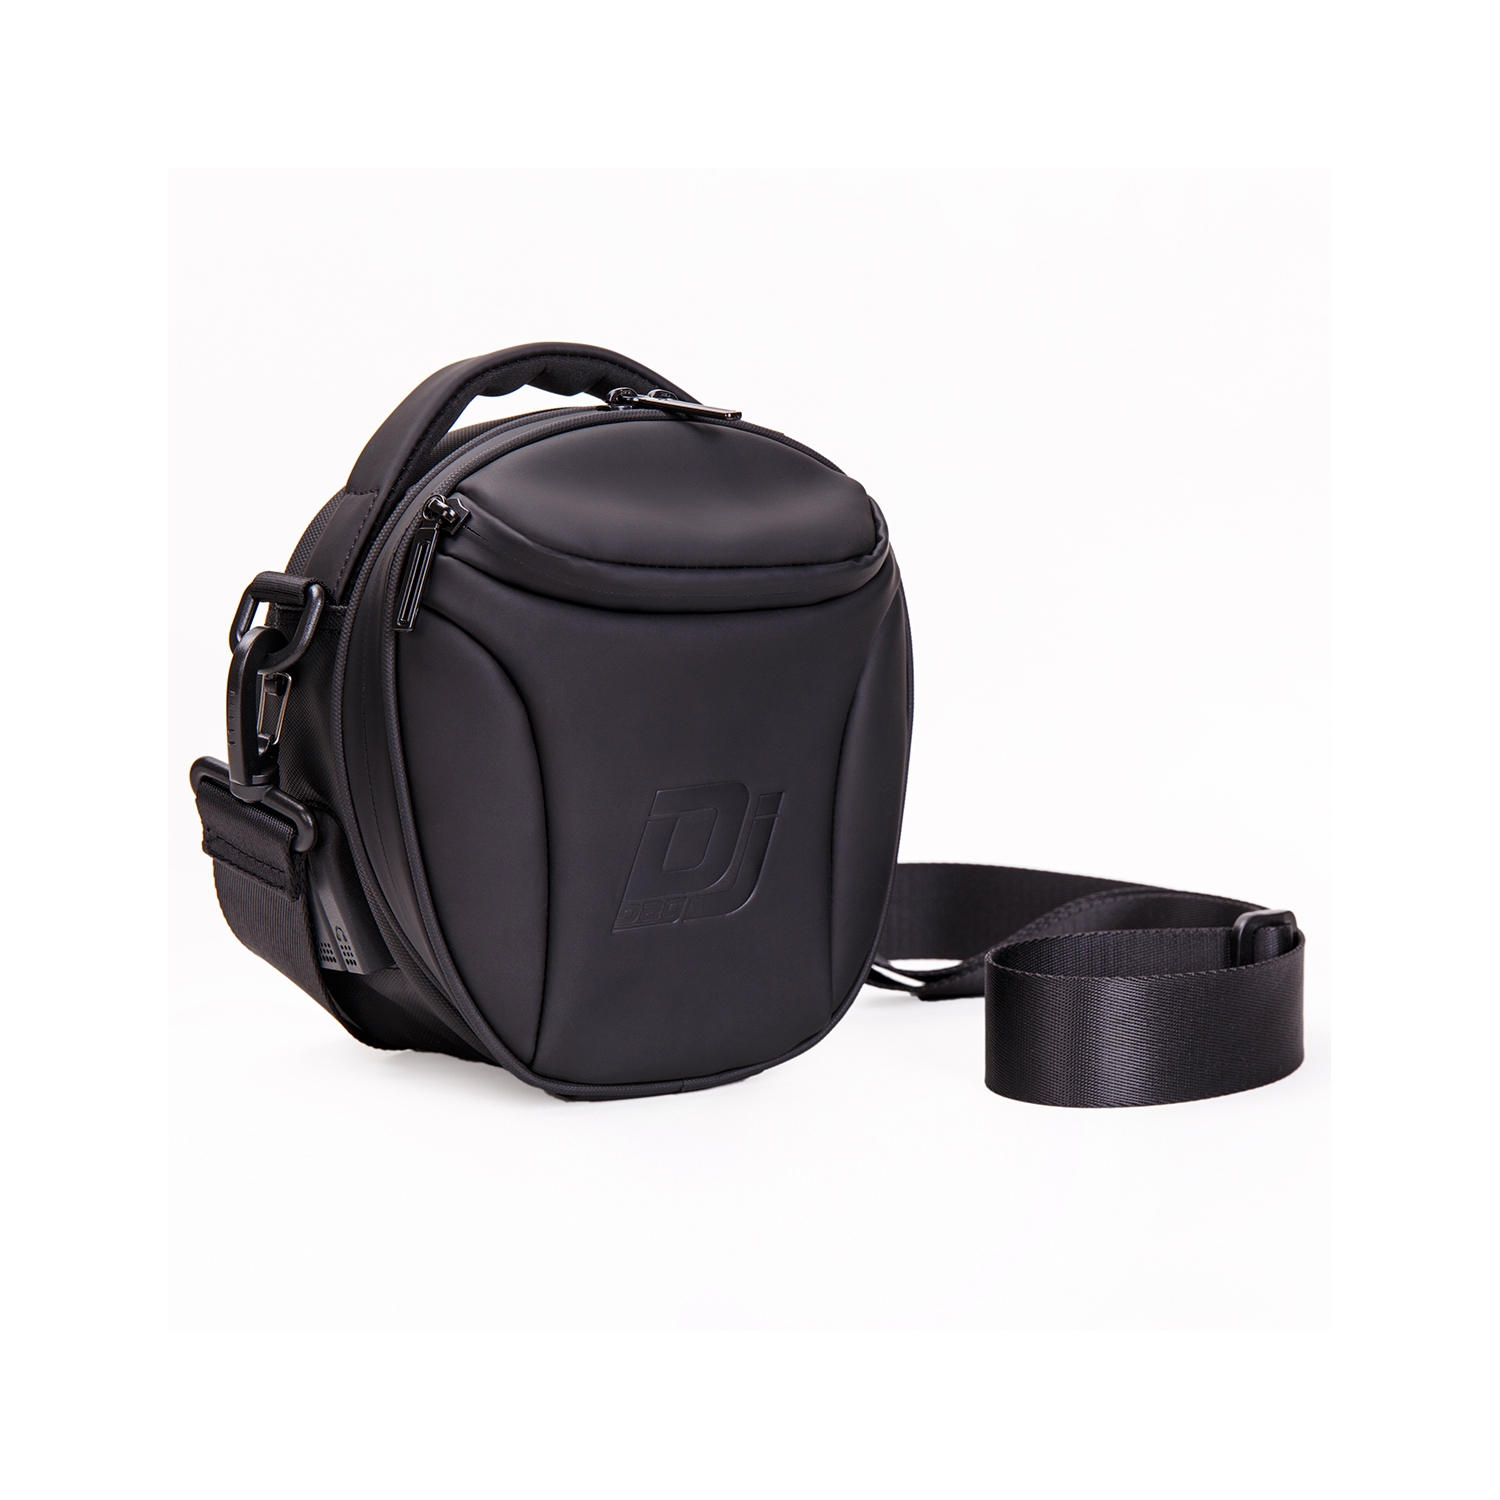 DJ BAG HP Urban - сумка для наушников с передним карманом